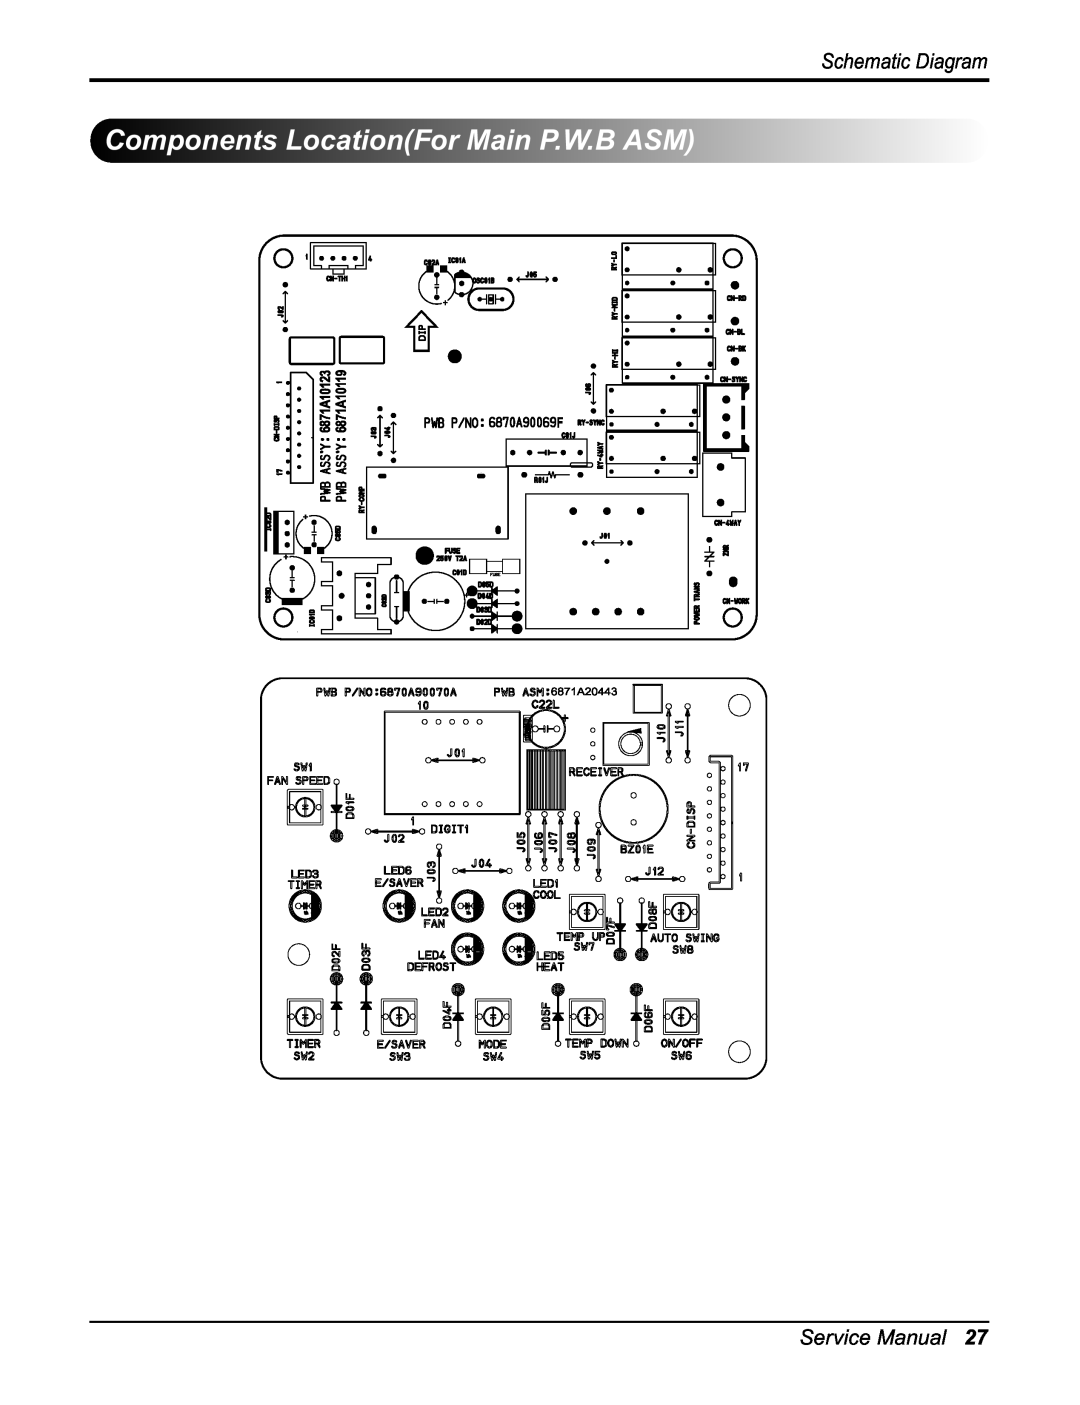 Heat Controller RAD-101A, RAD-81A, RADS-81B manual Components LocationFor Main P.W.B ASM, Schematic Diagram 